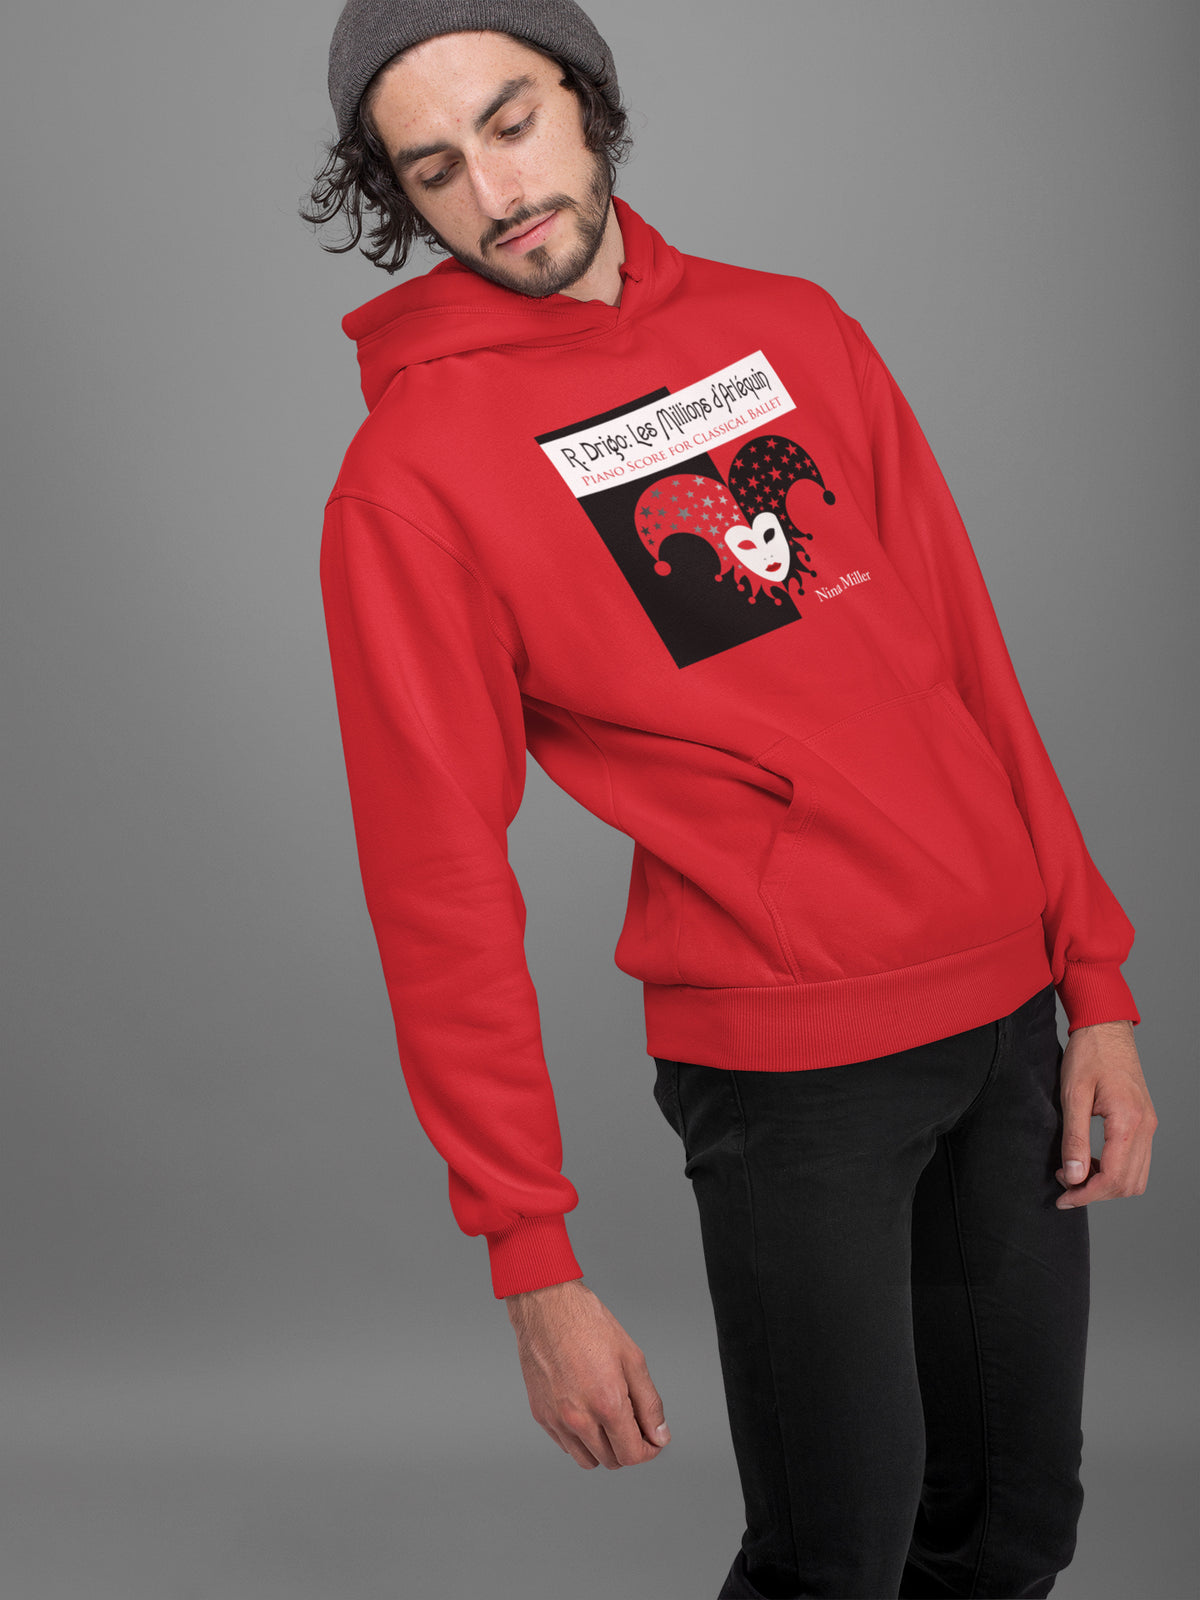 Les Millions d'Arlequin (Red) - Unisex Heavy Blend™ Hooded Sweatshirt